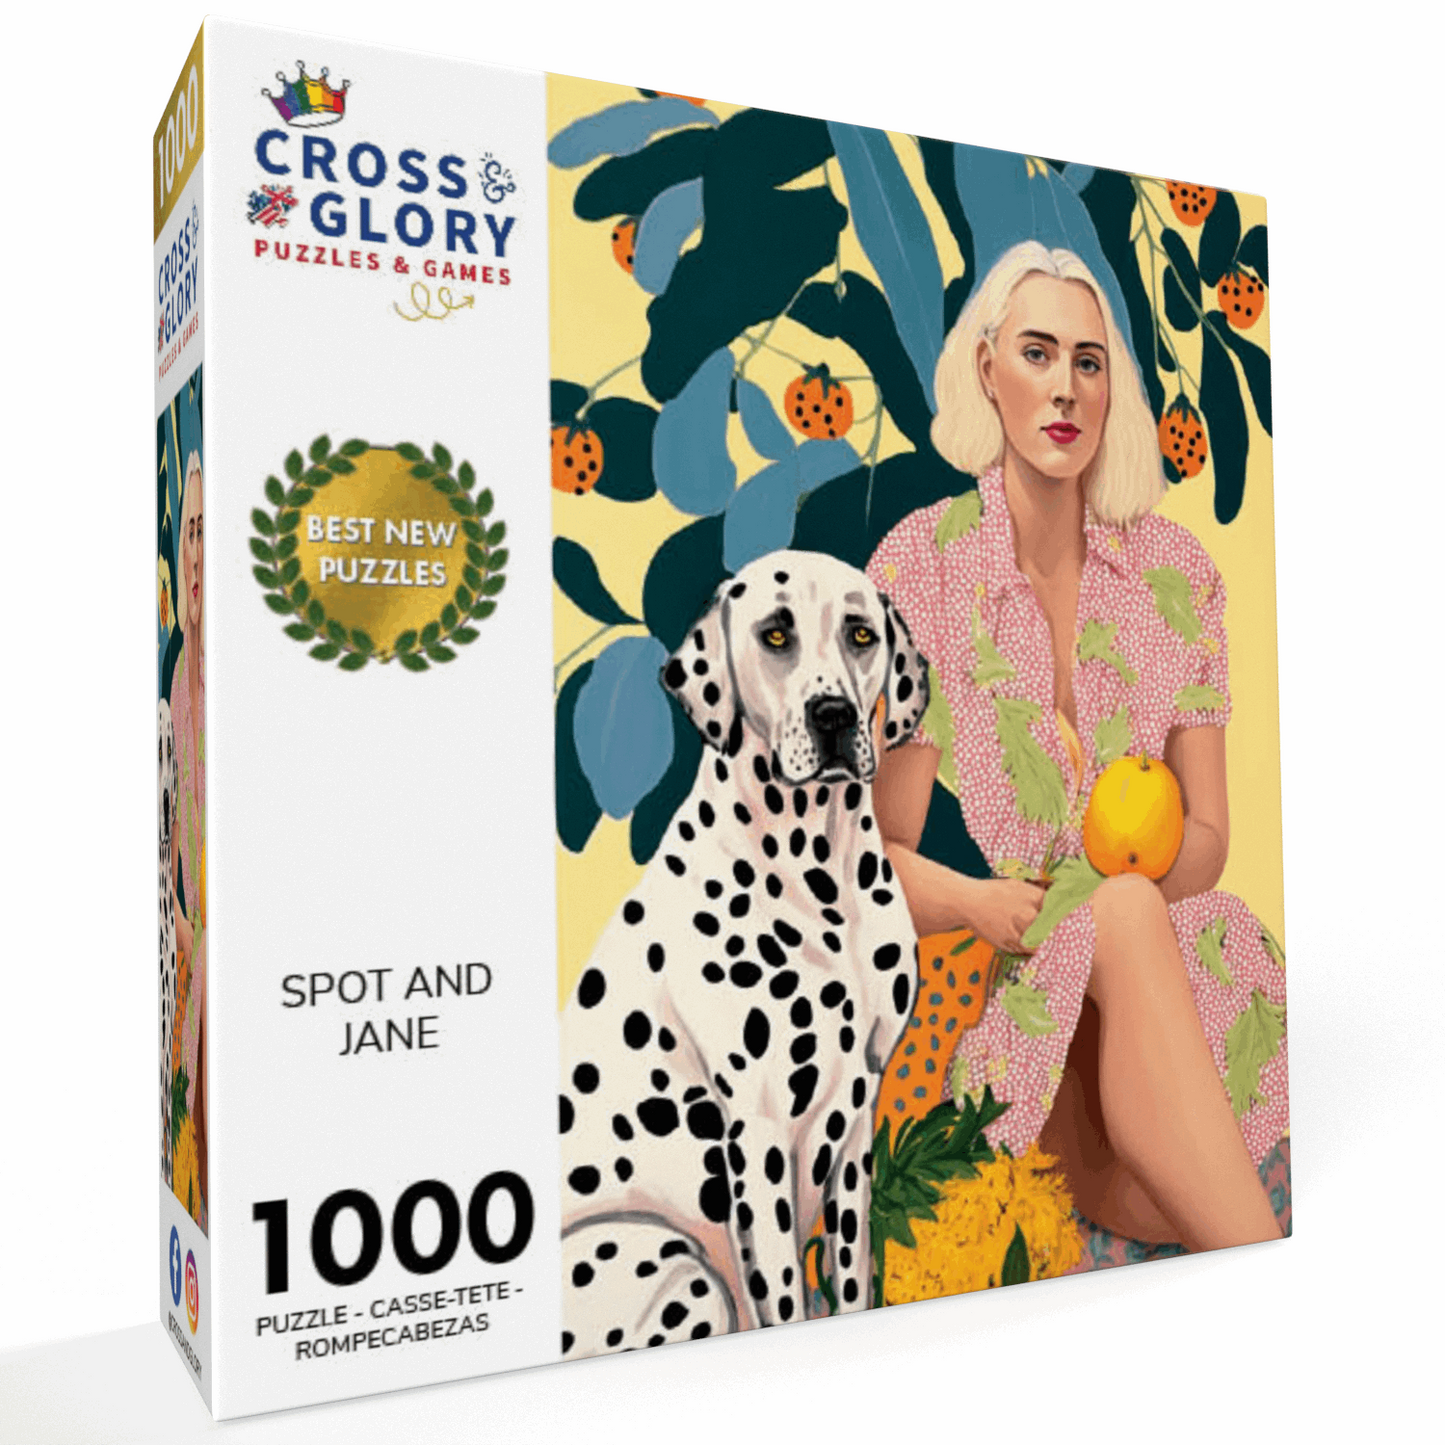 Spot and Jane - 1000 Piece Jigsaw Puzzle | Cross & Glory